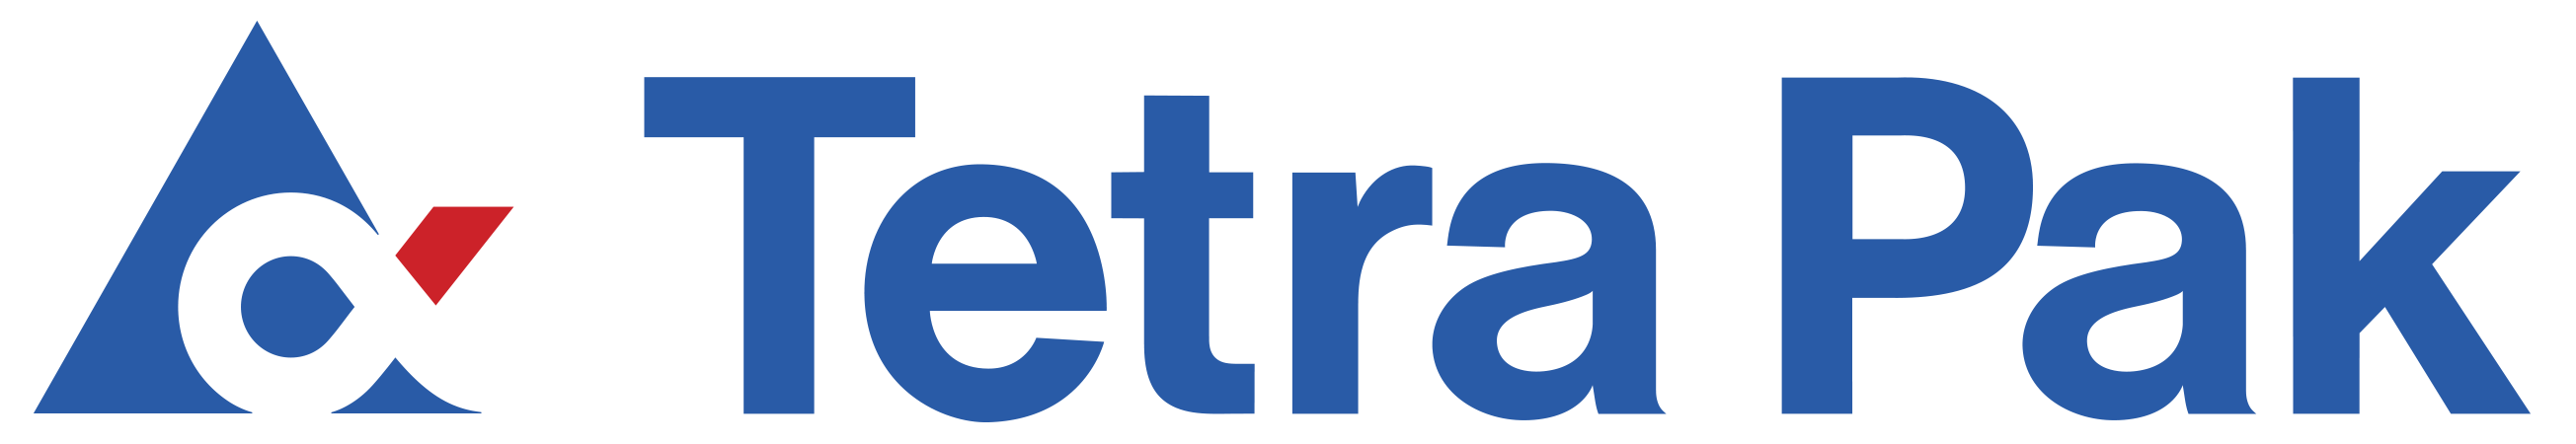 Tetra_Pak_Logo